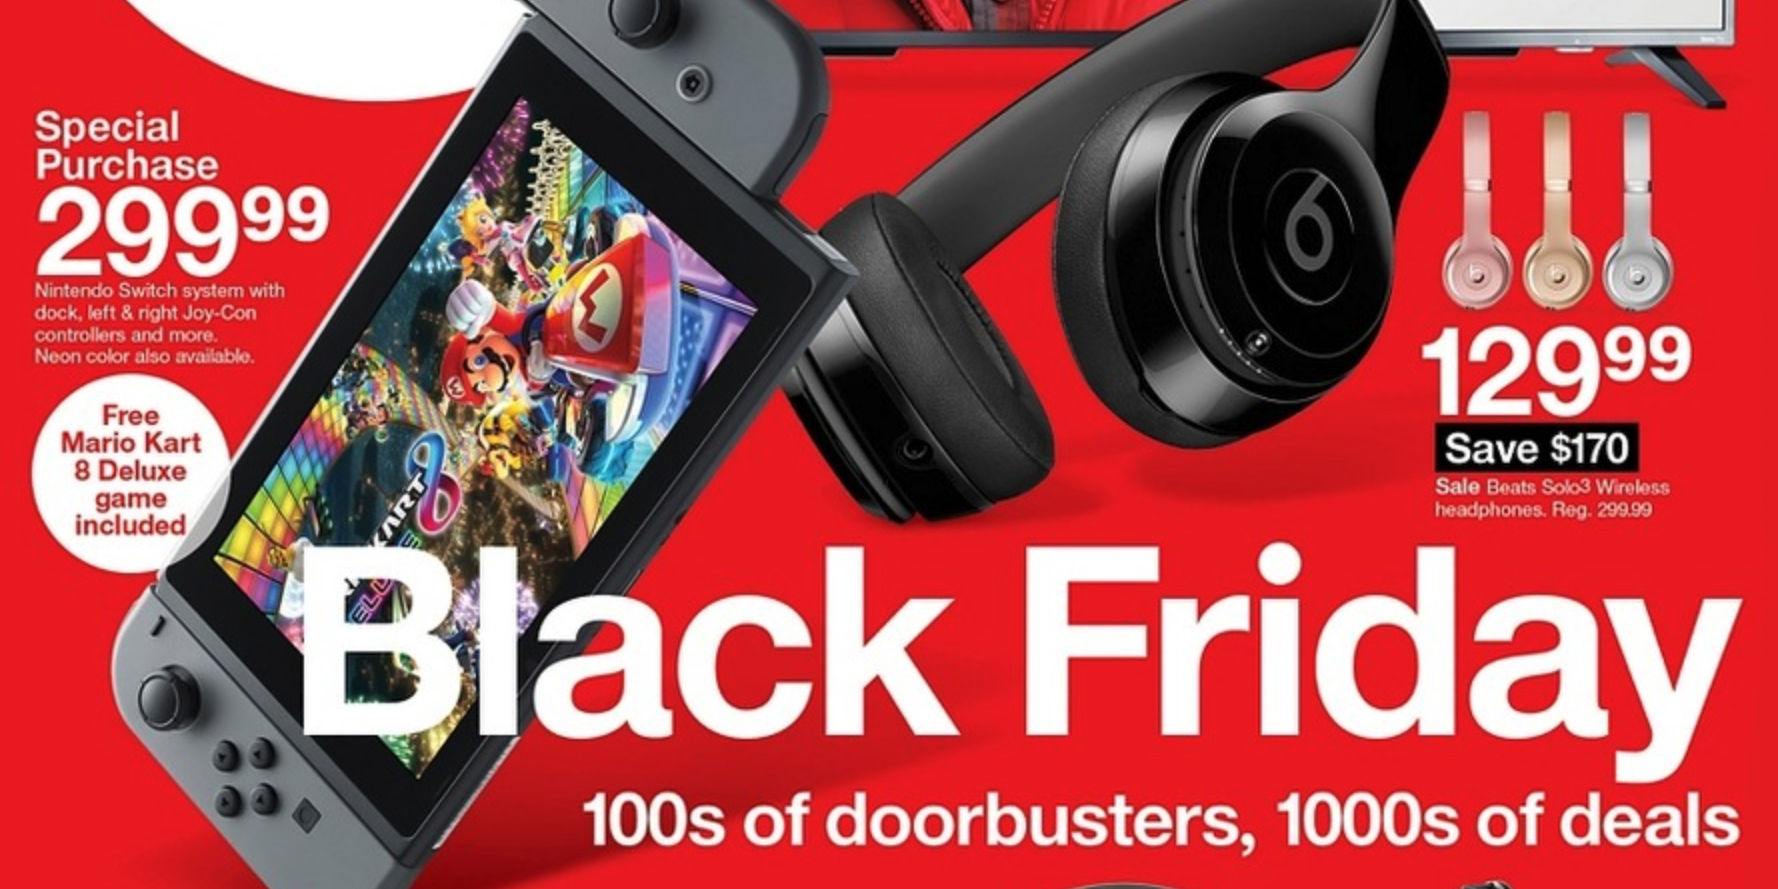 Target Black Friday Deals Start Today